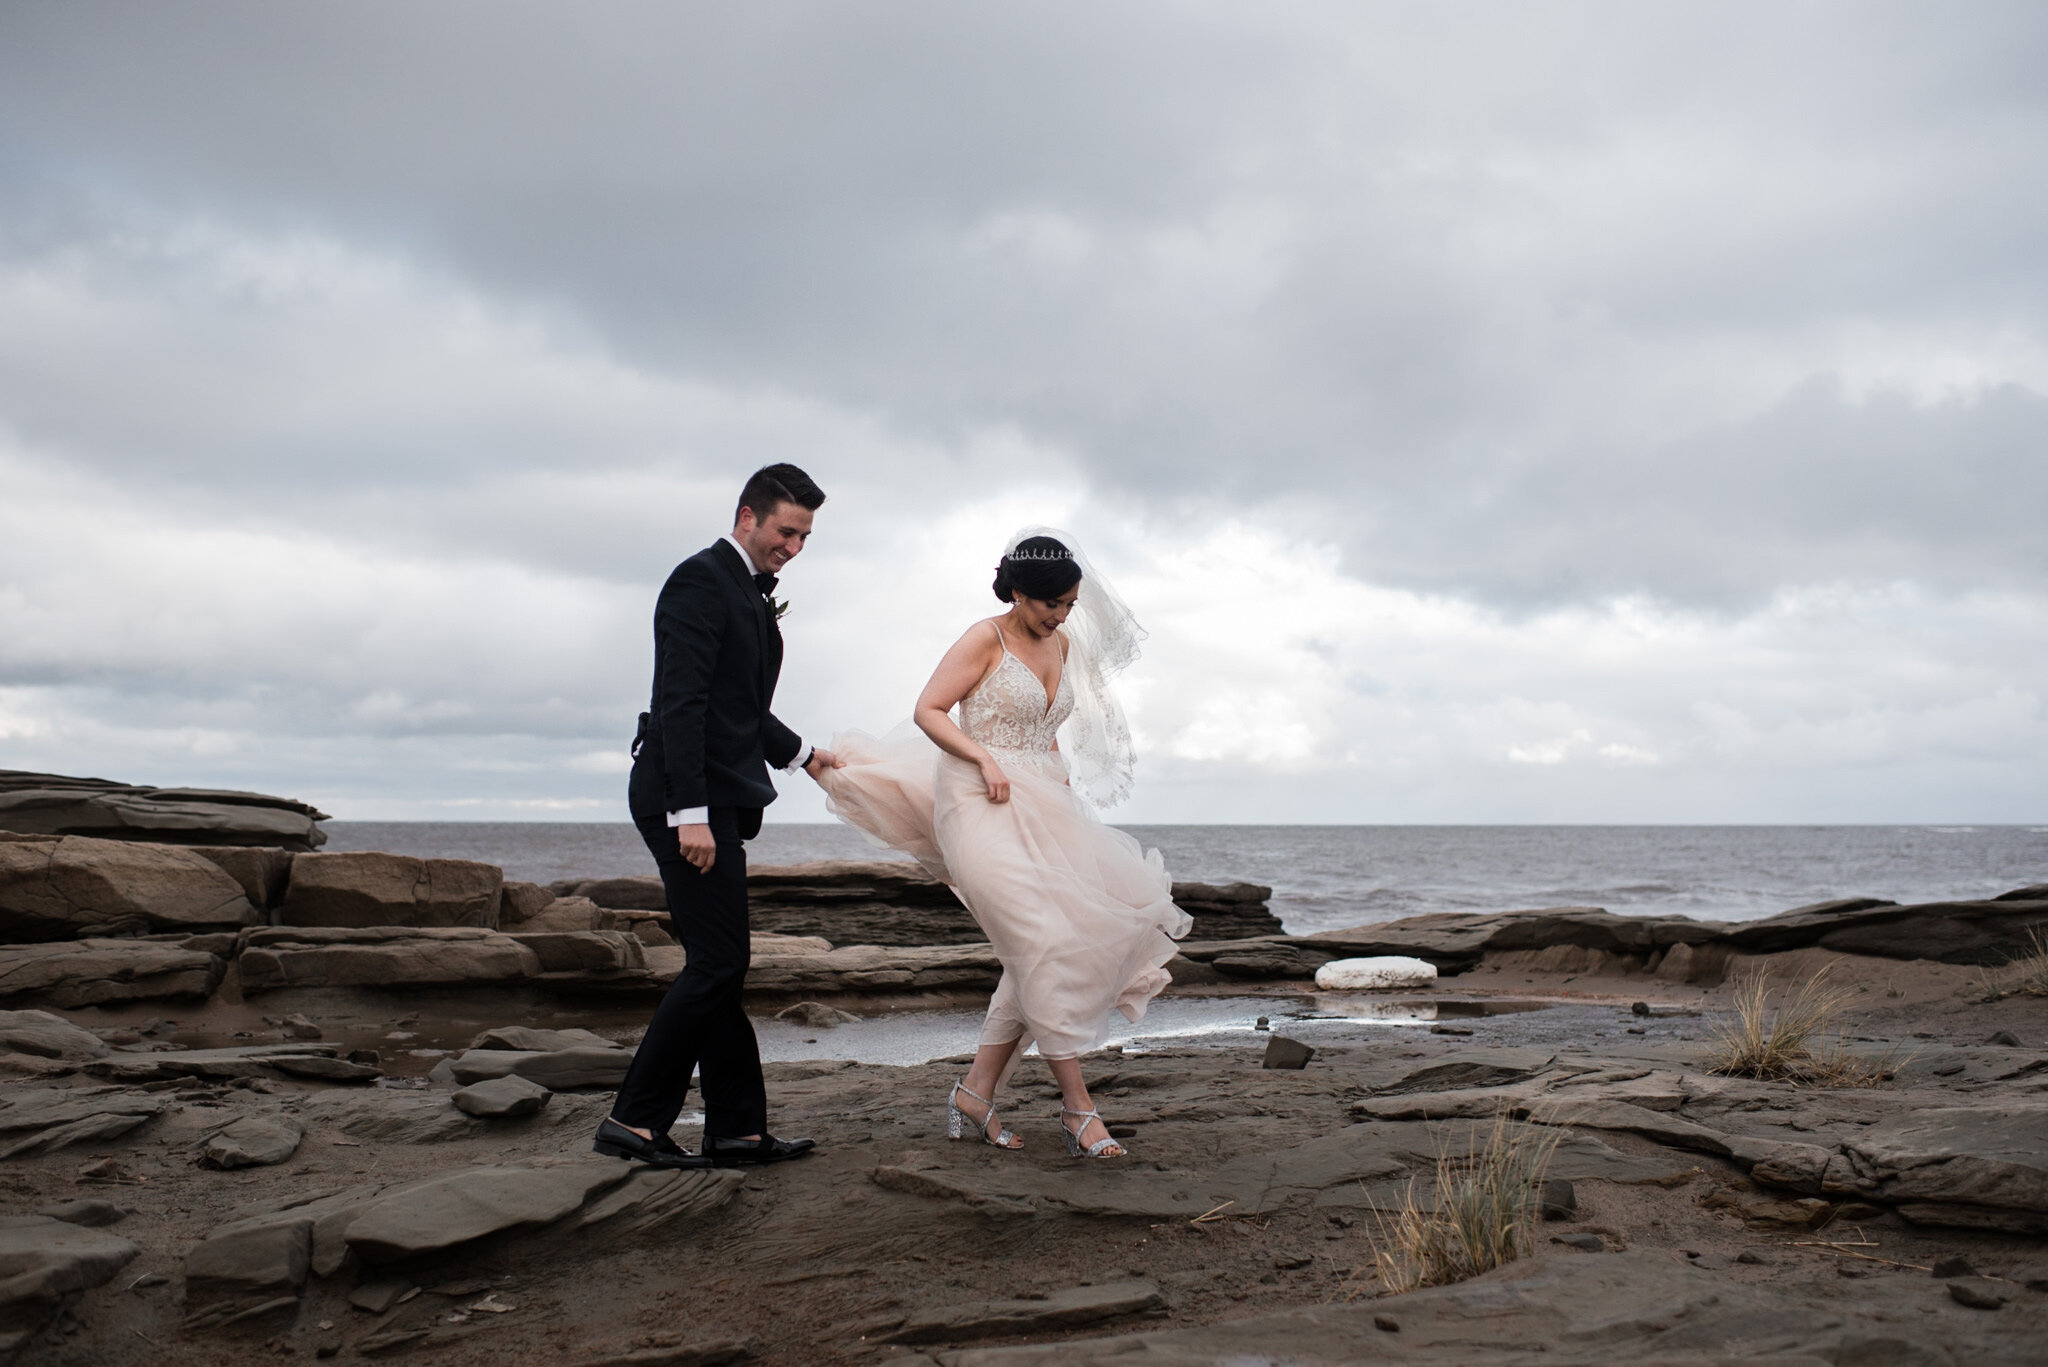 310-east-coast-bride-groom-wedding-portraits-windy-winter-adventure.jpg